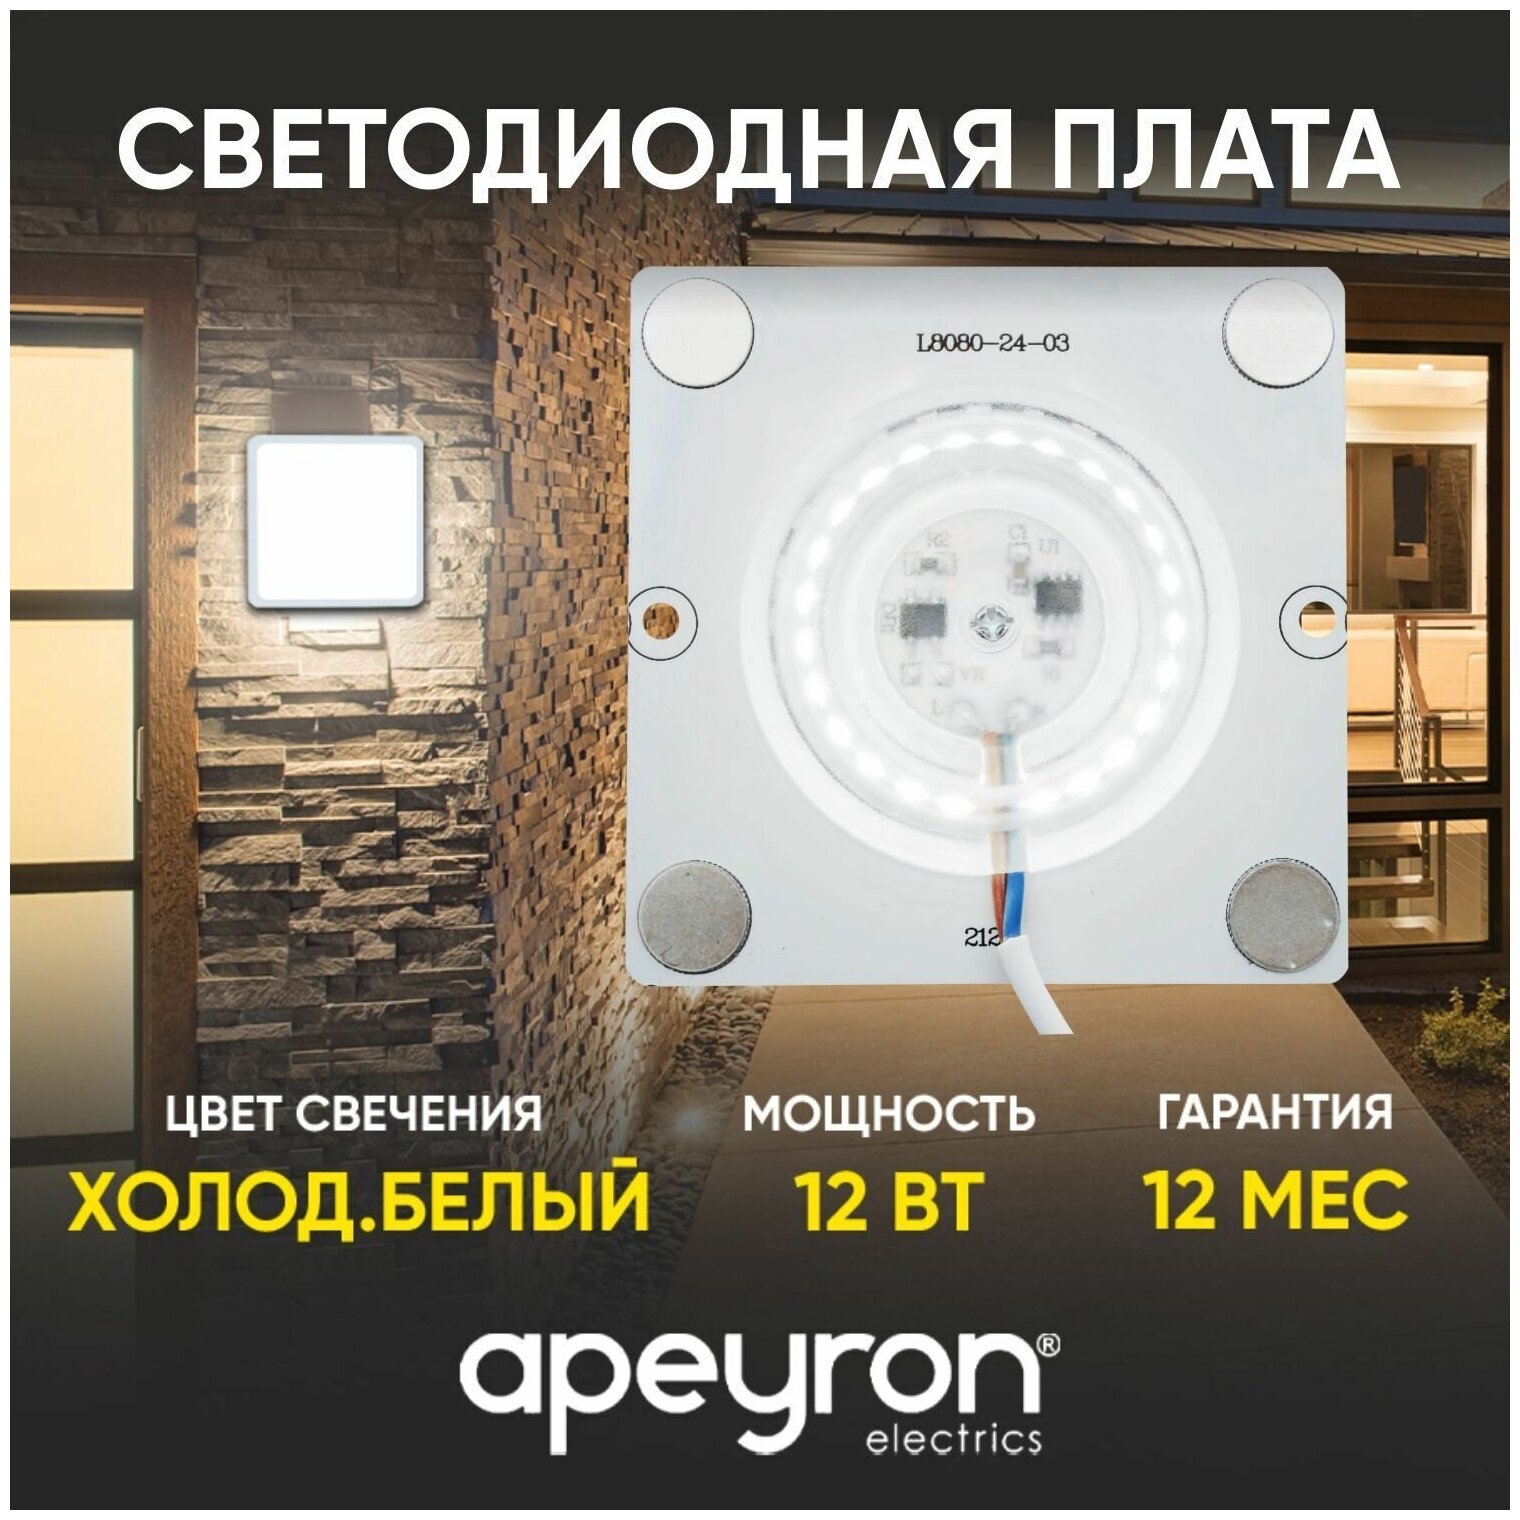 Светодиодный модуль Apeyron - фото №1